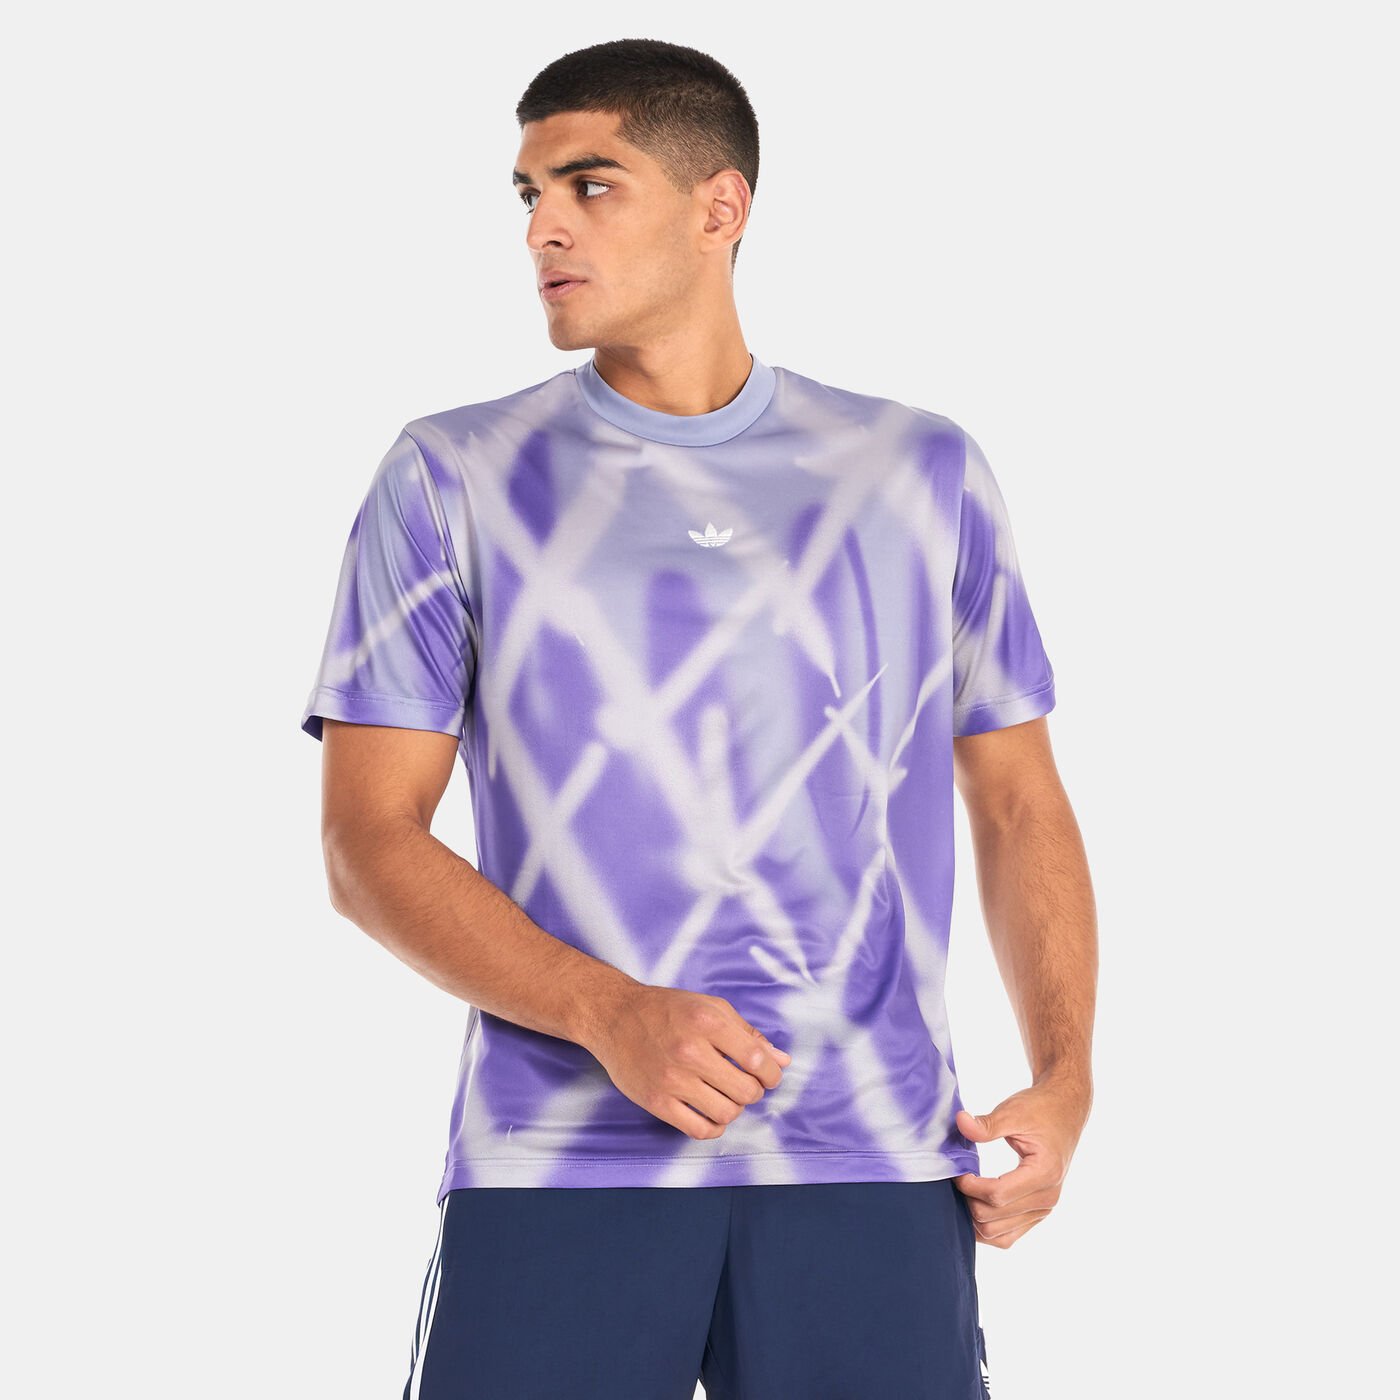 Men's Streetball Printed T-Shirt